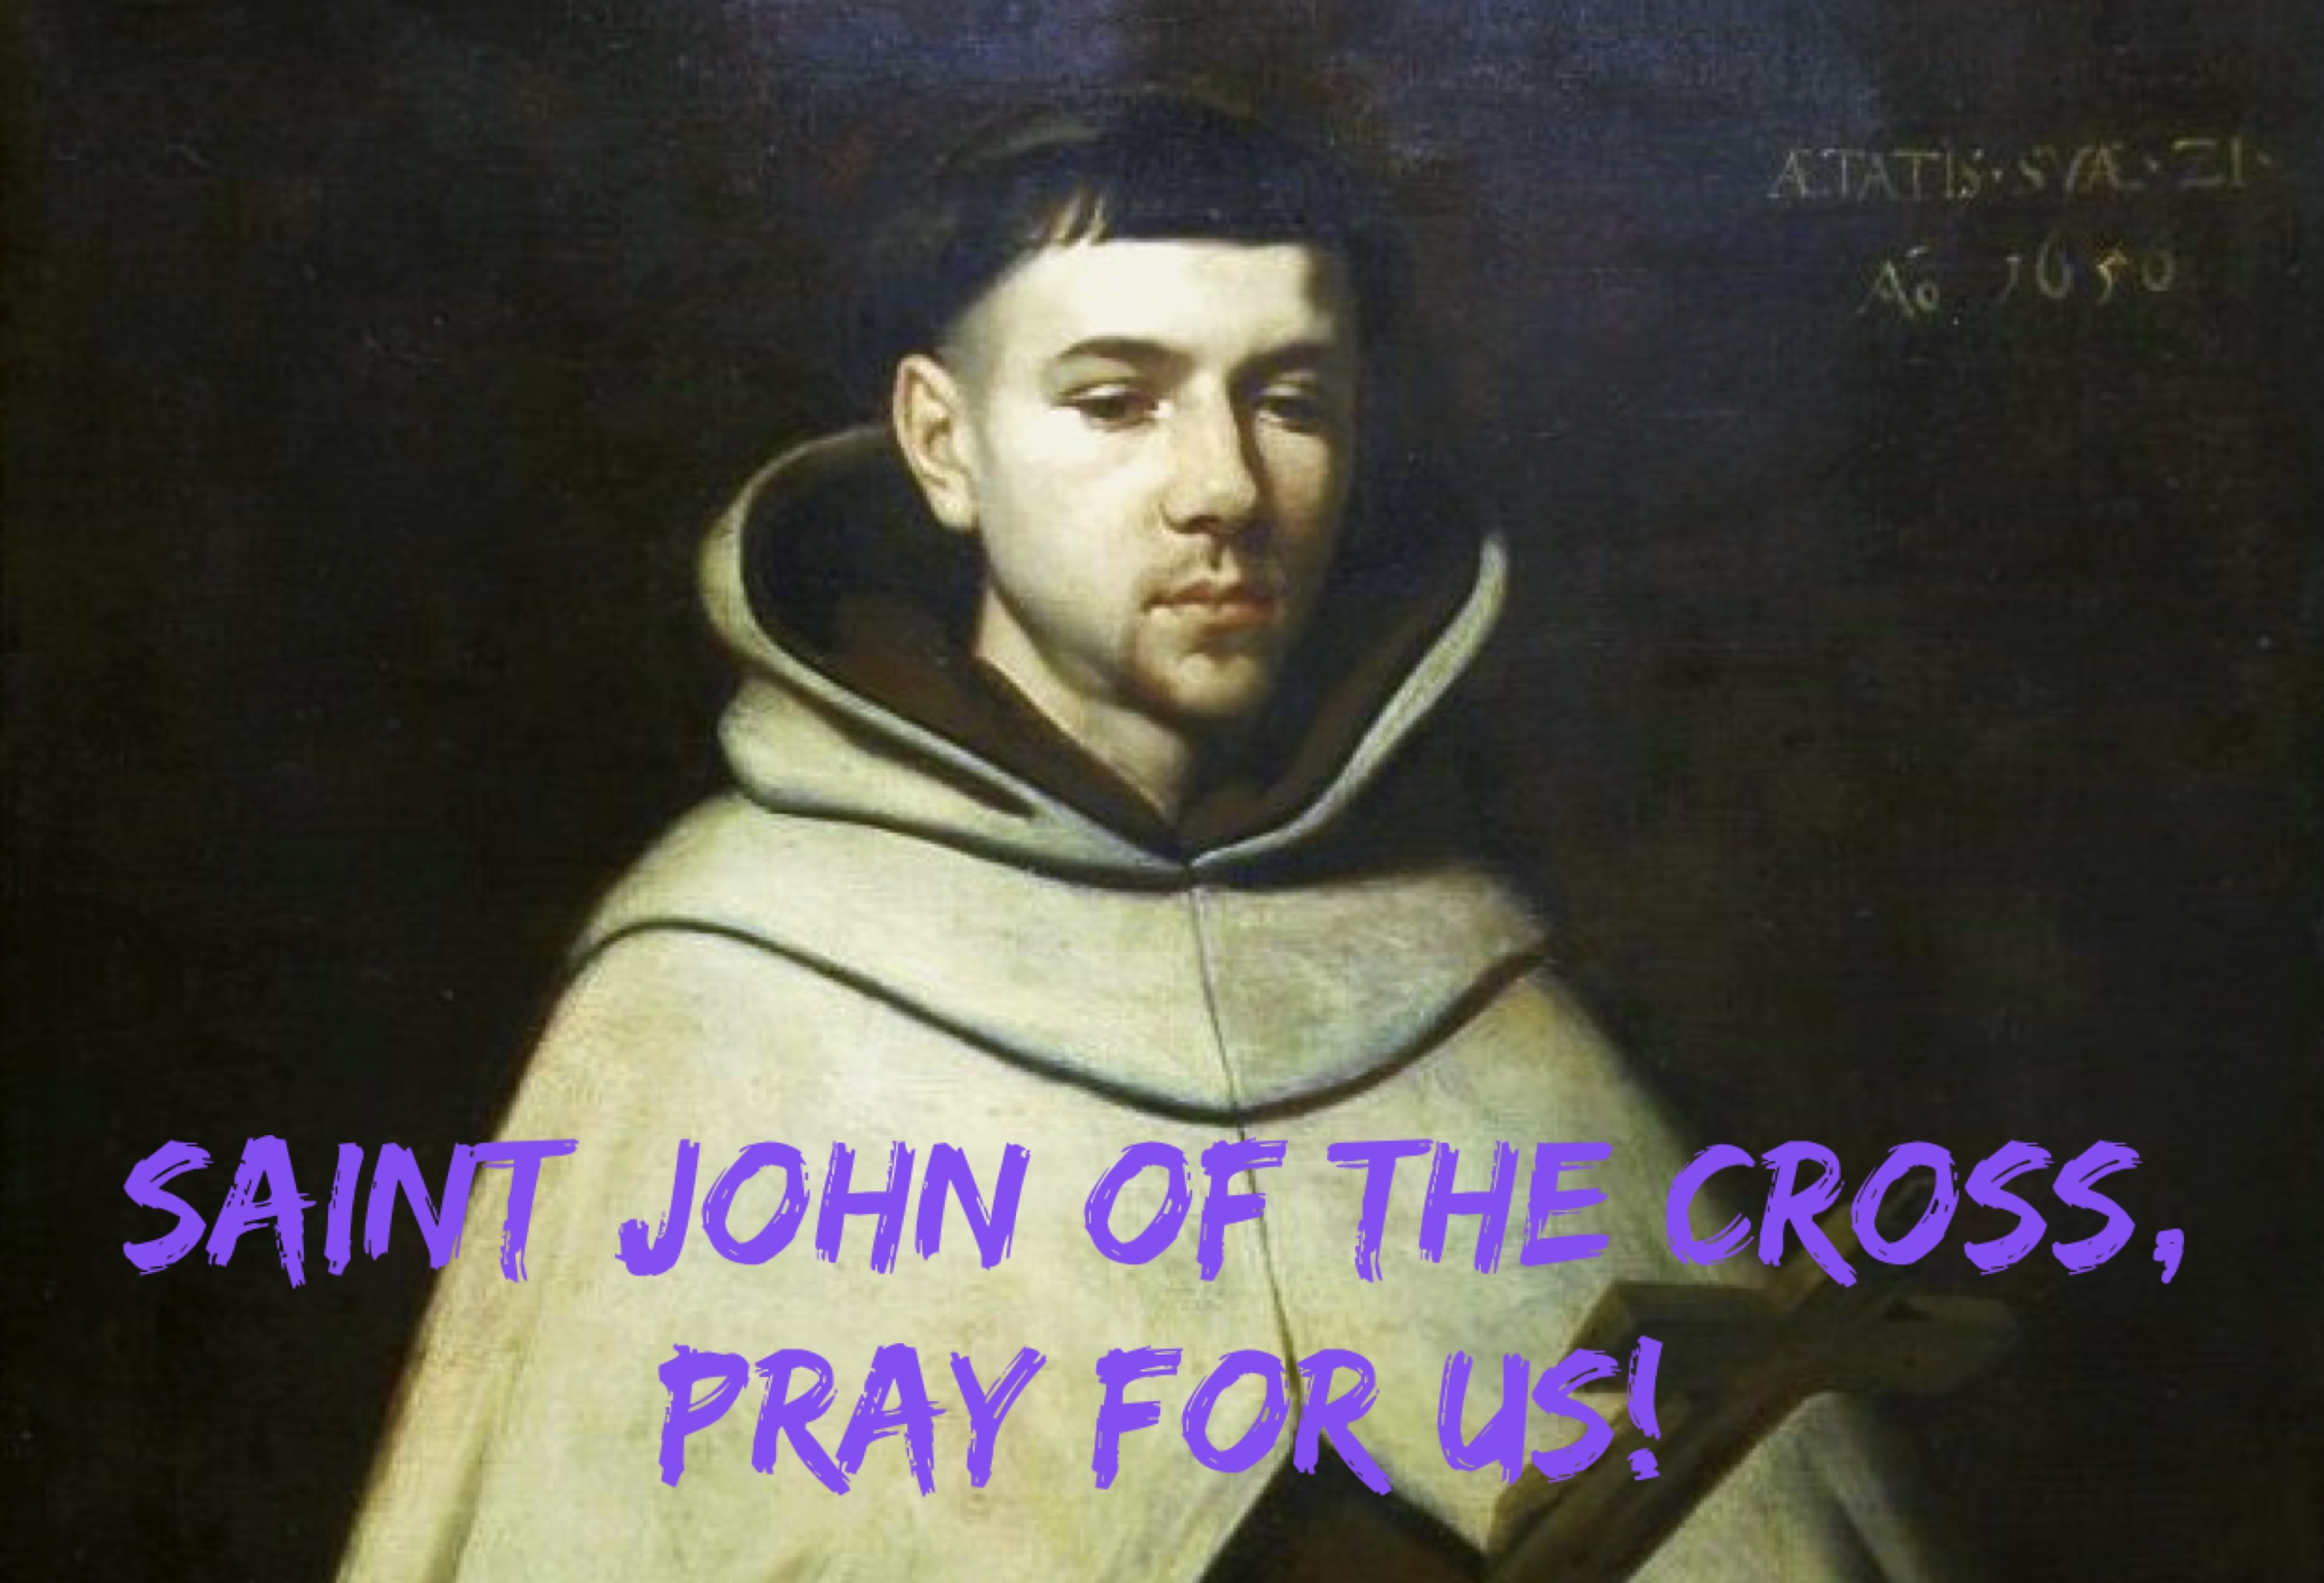 14th December - Saint John of the Cross